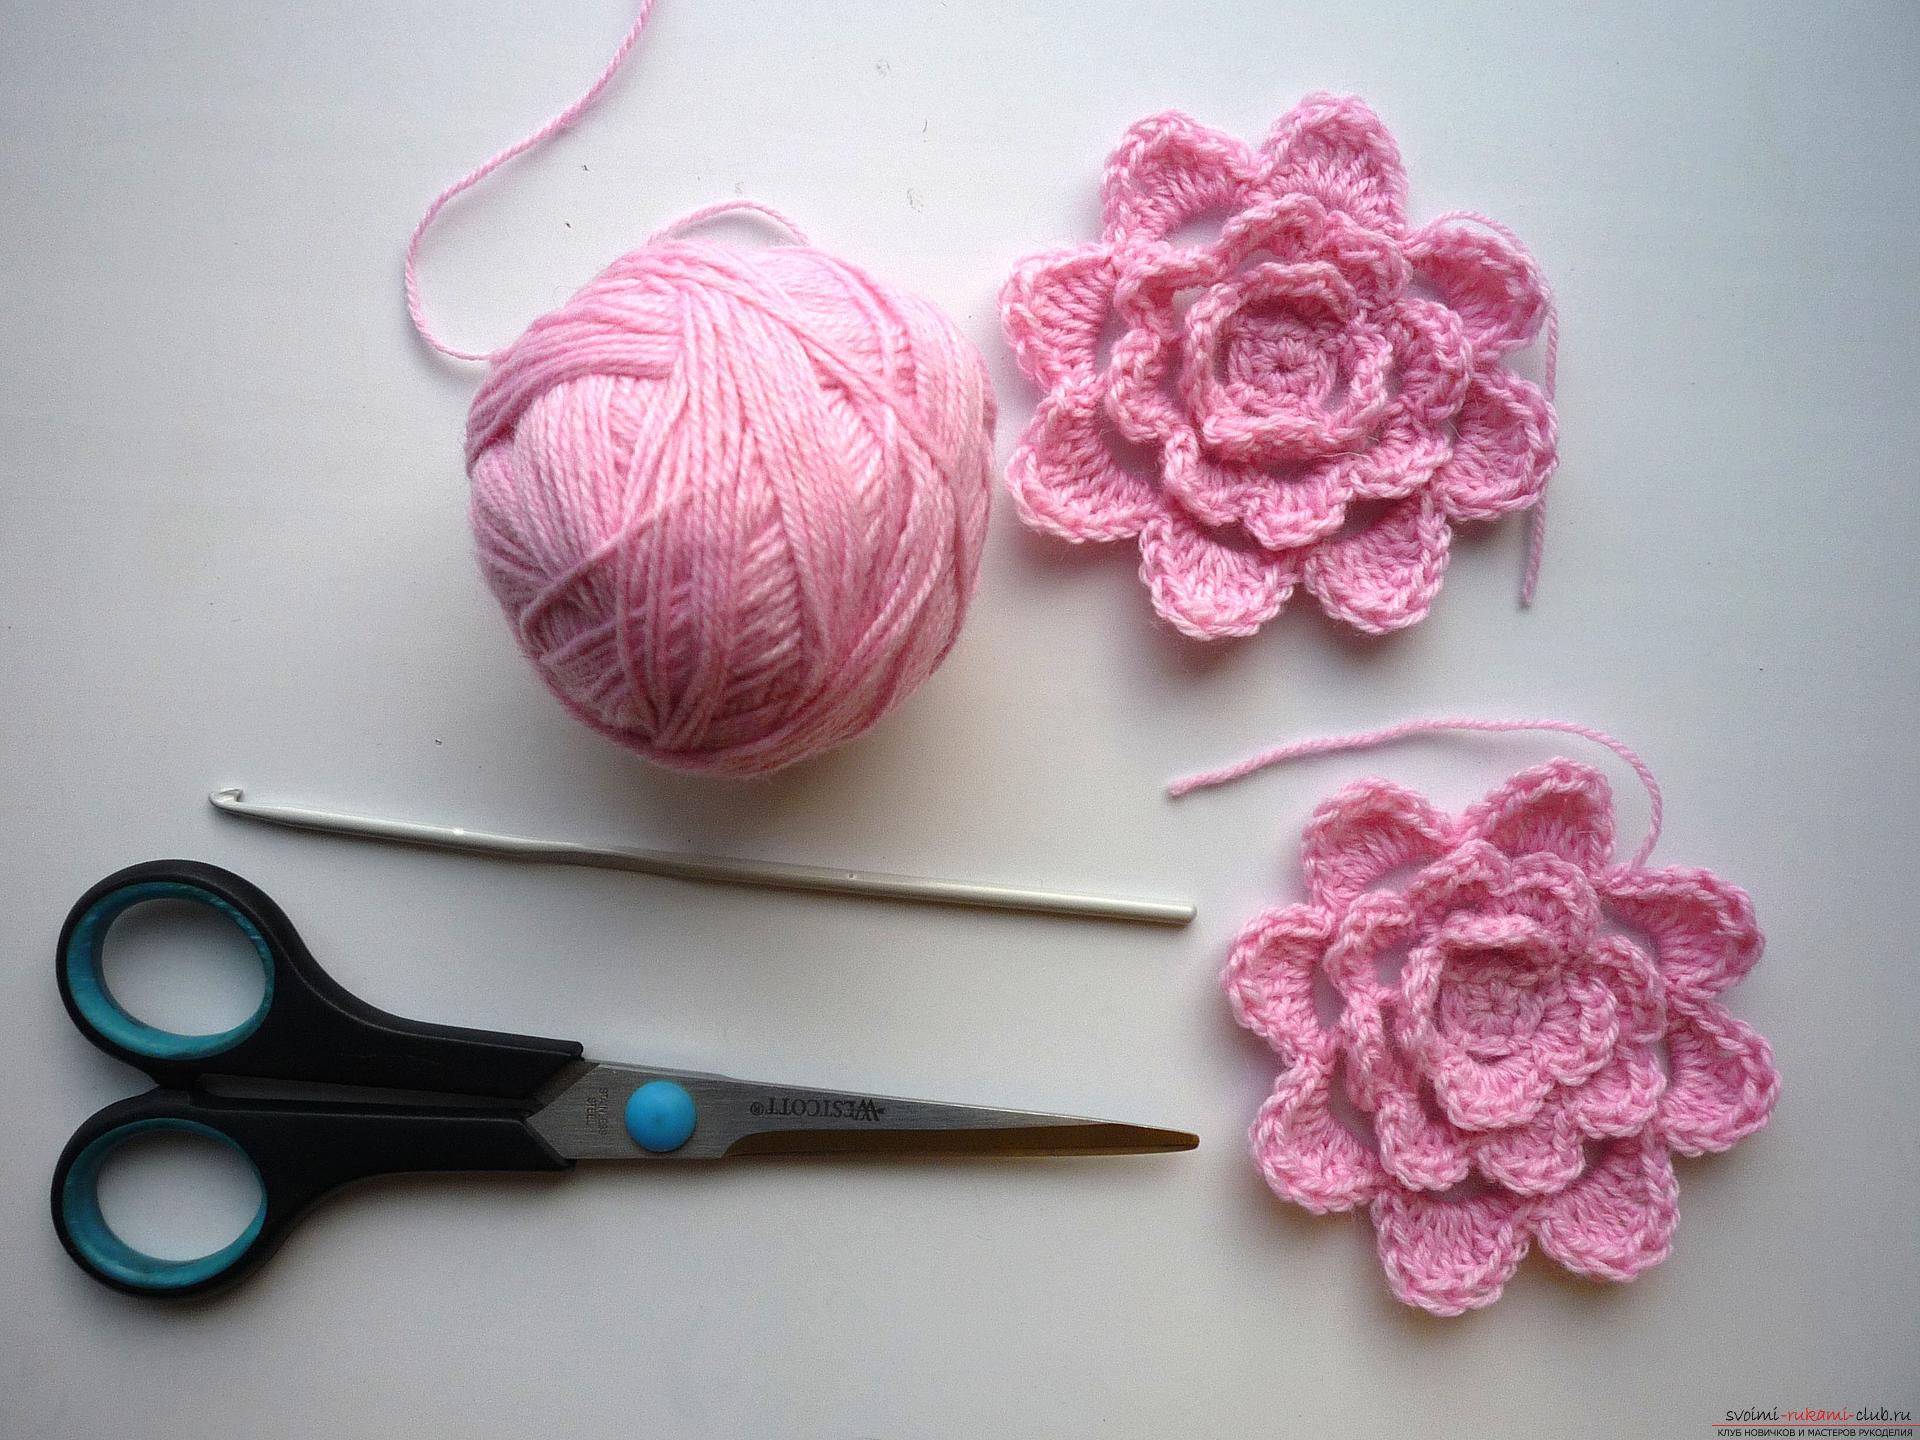 This crochet masterclass contains a crochet color scheme for the plaid .. Photo # 2